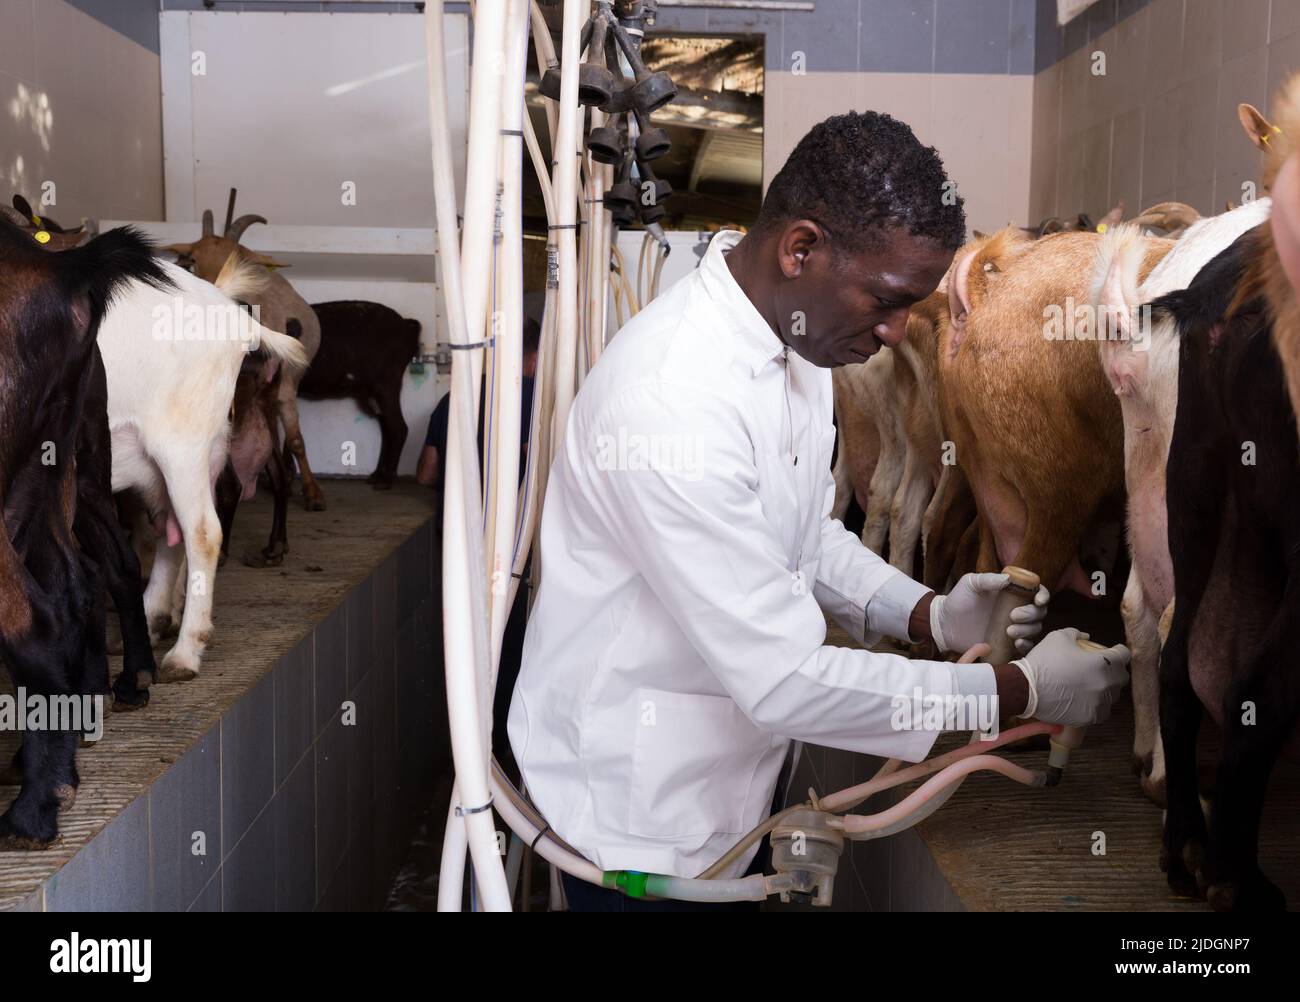 Man milking goats on farm Stock Photo